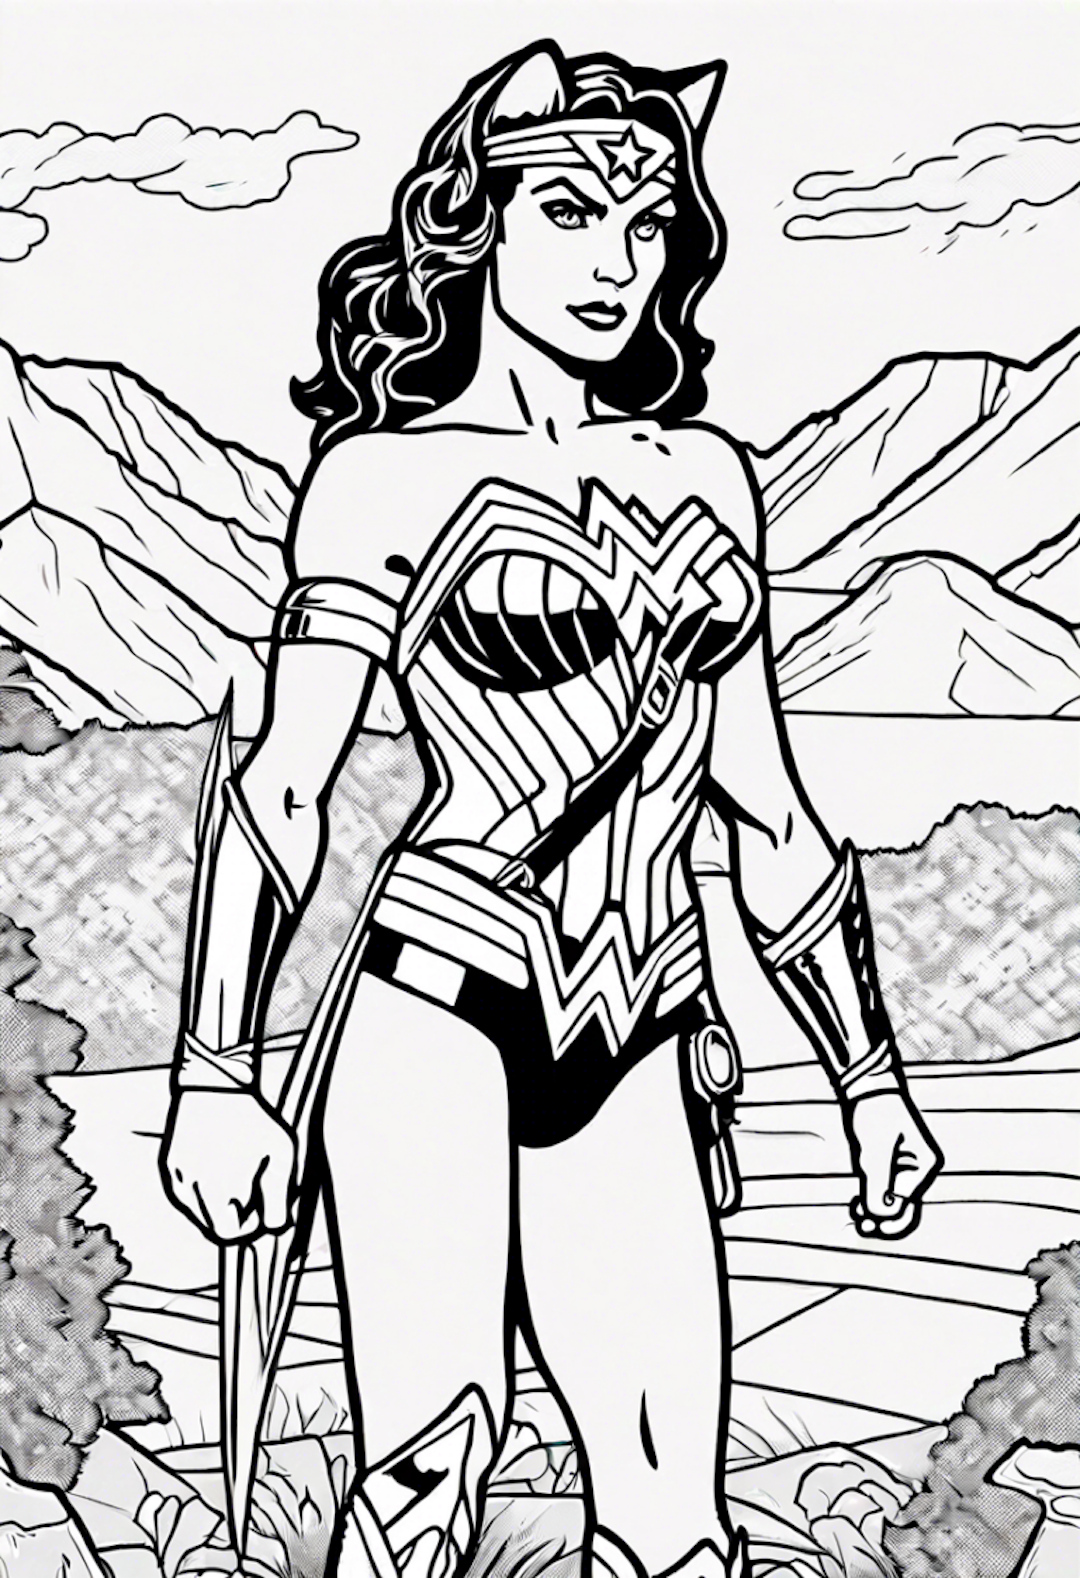 Wonder Woman Cat coloring pages